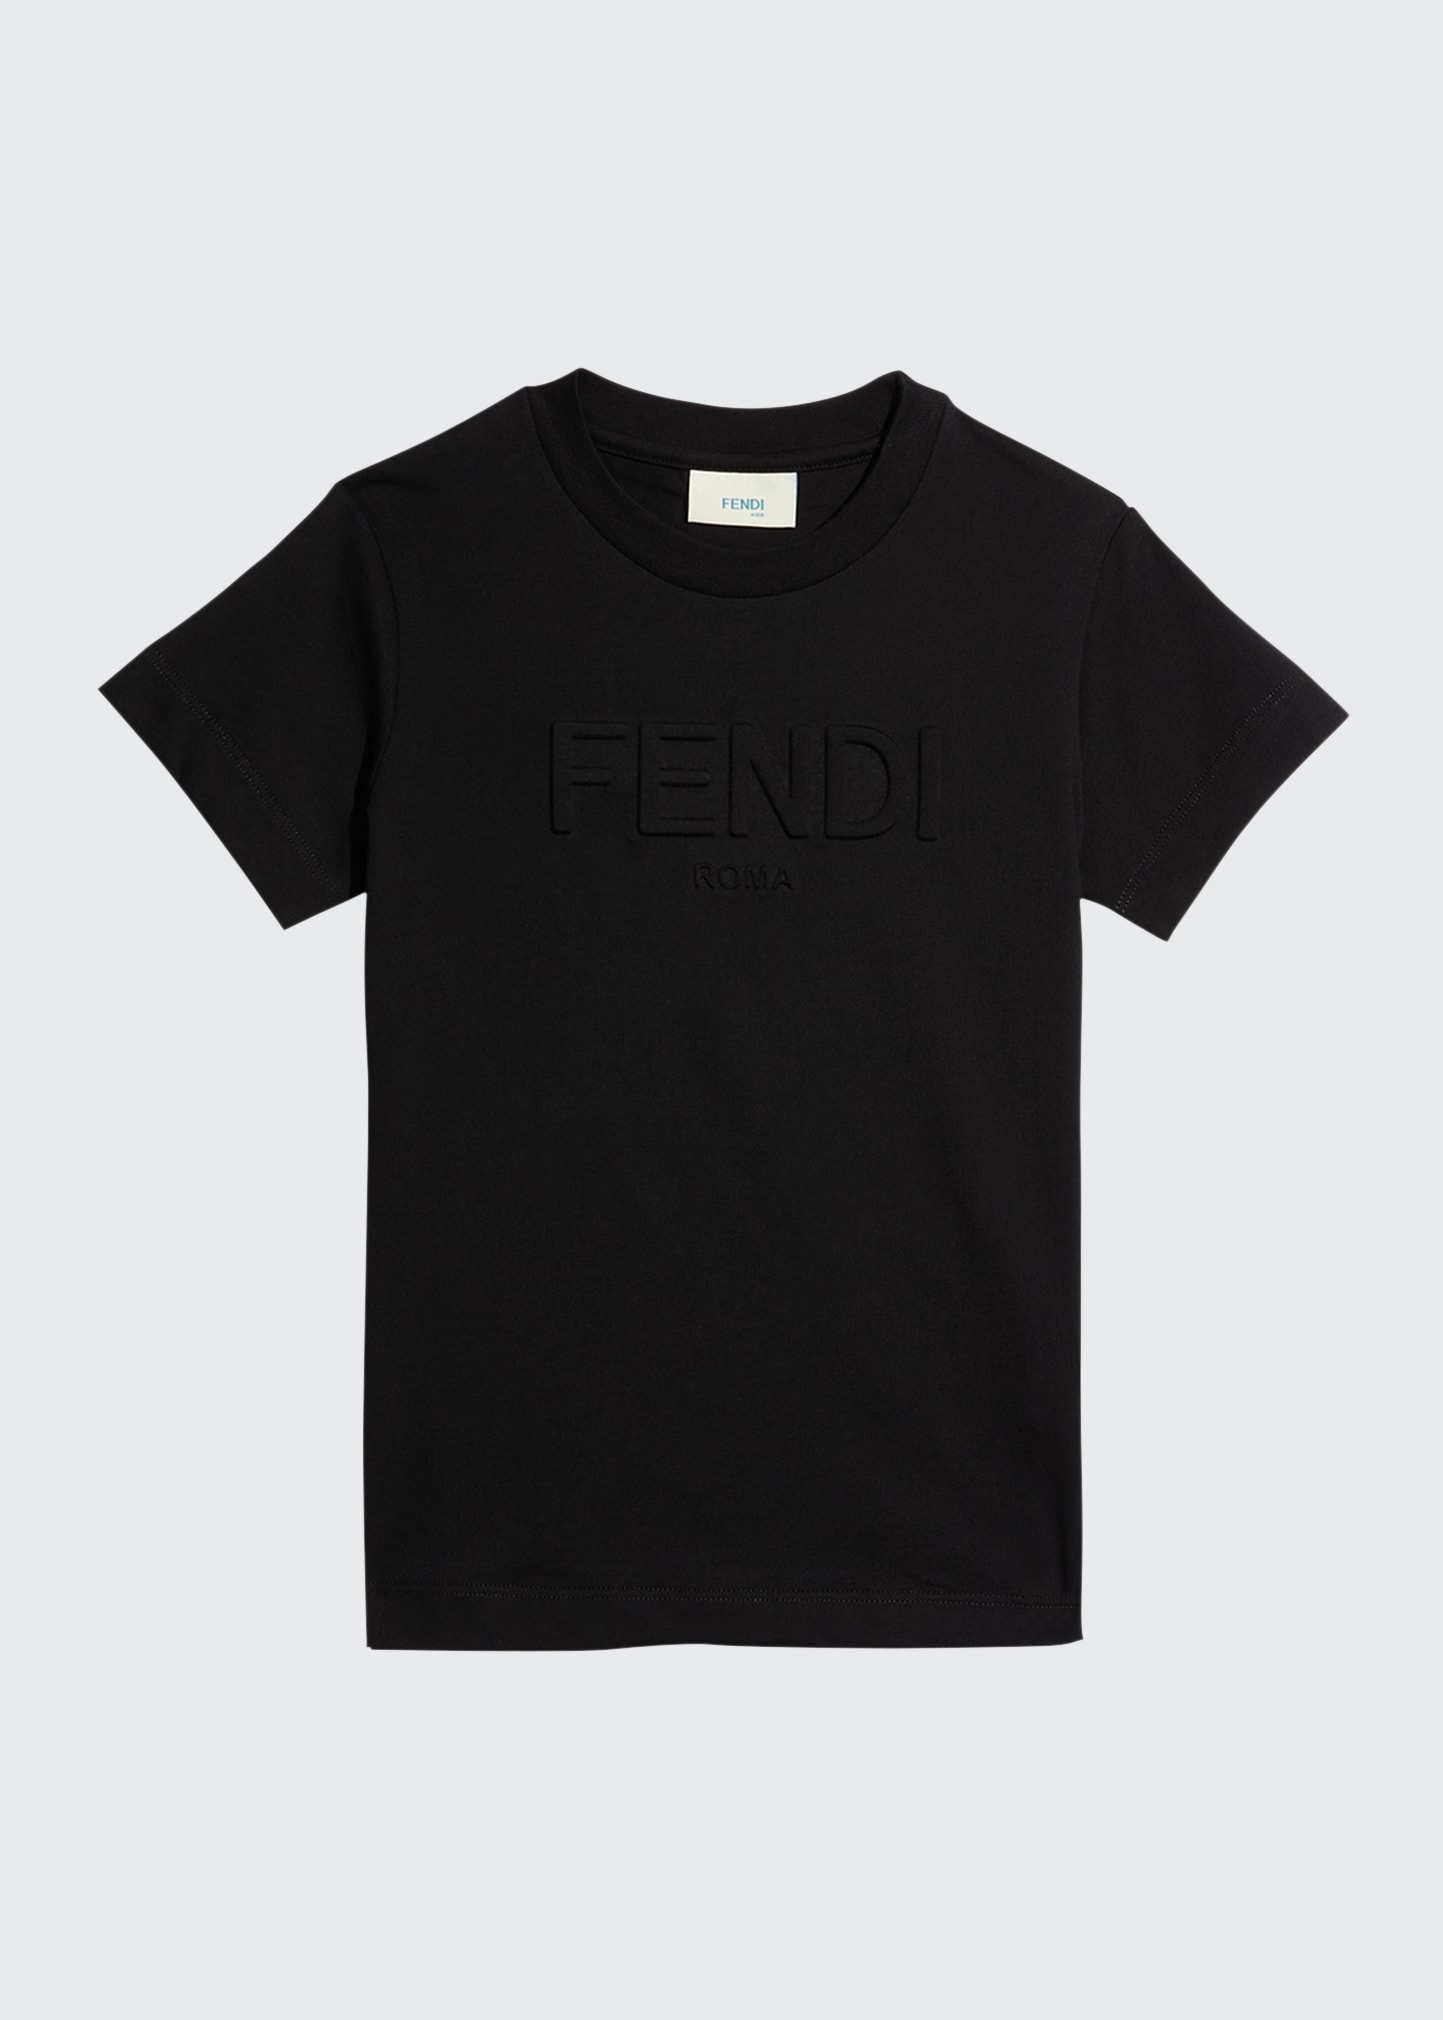 FENDI T-Shirts for Men | ModeSens